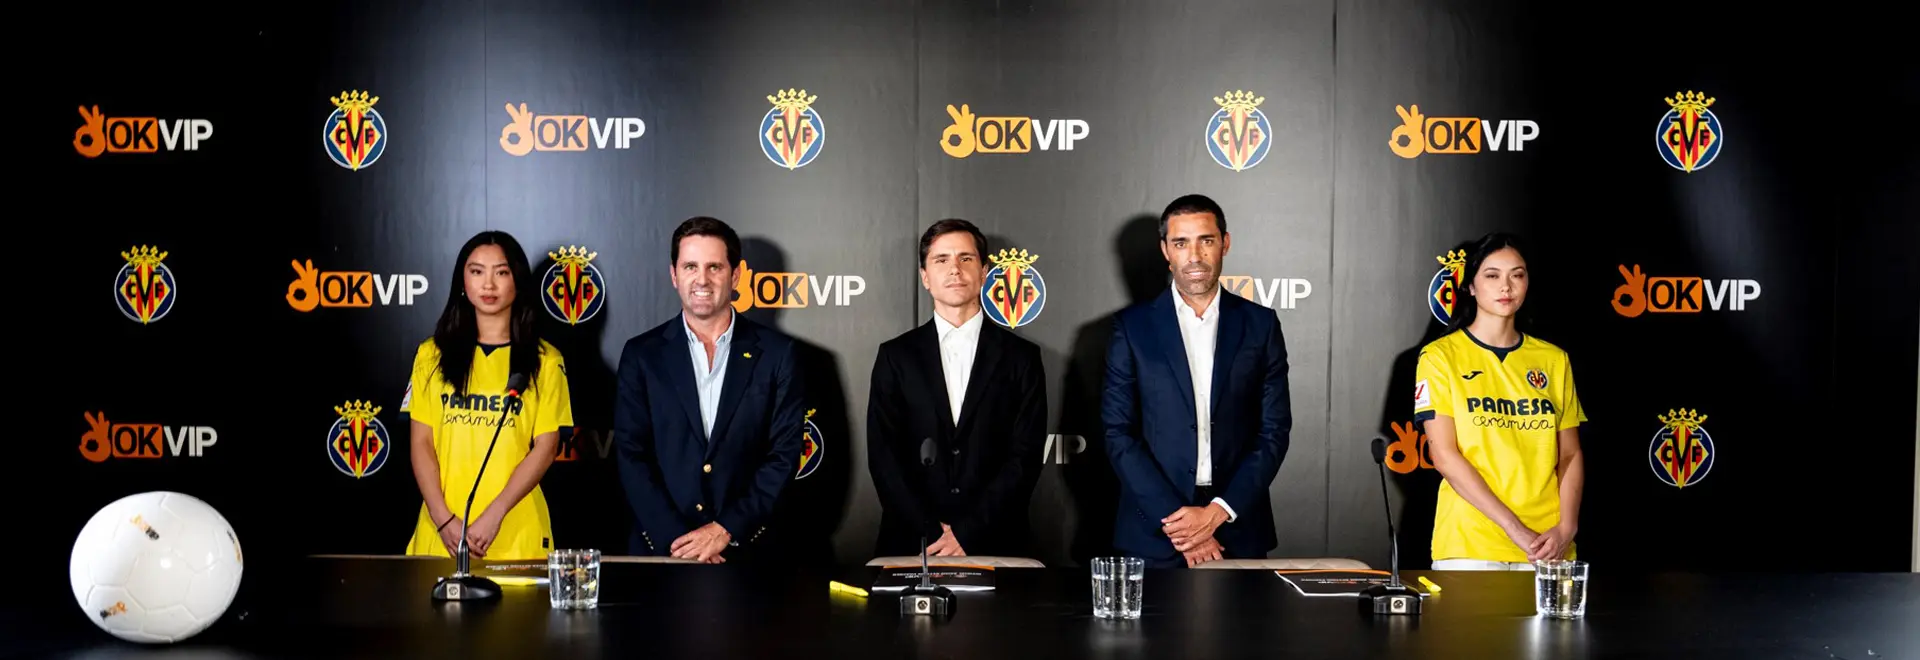 OKVIP hợp tác với Villarreal